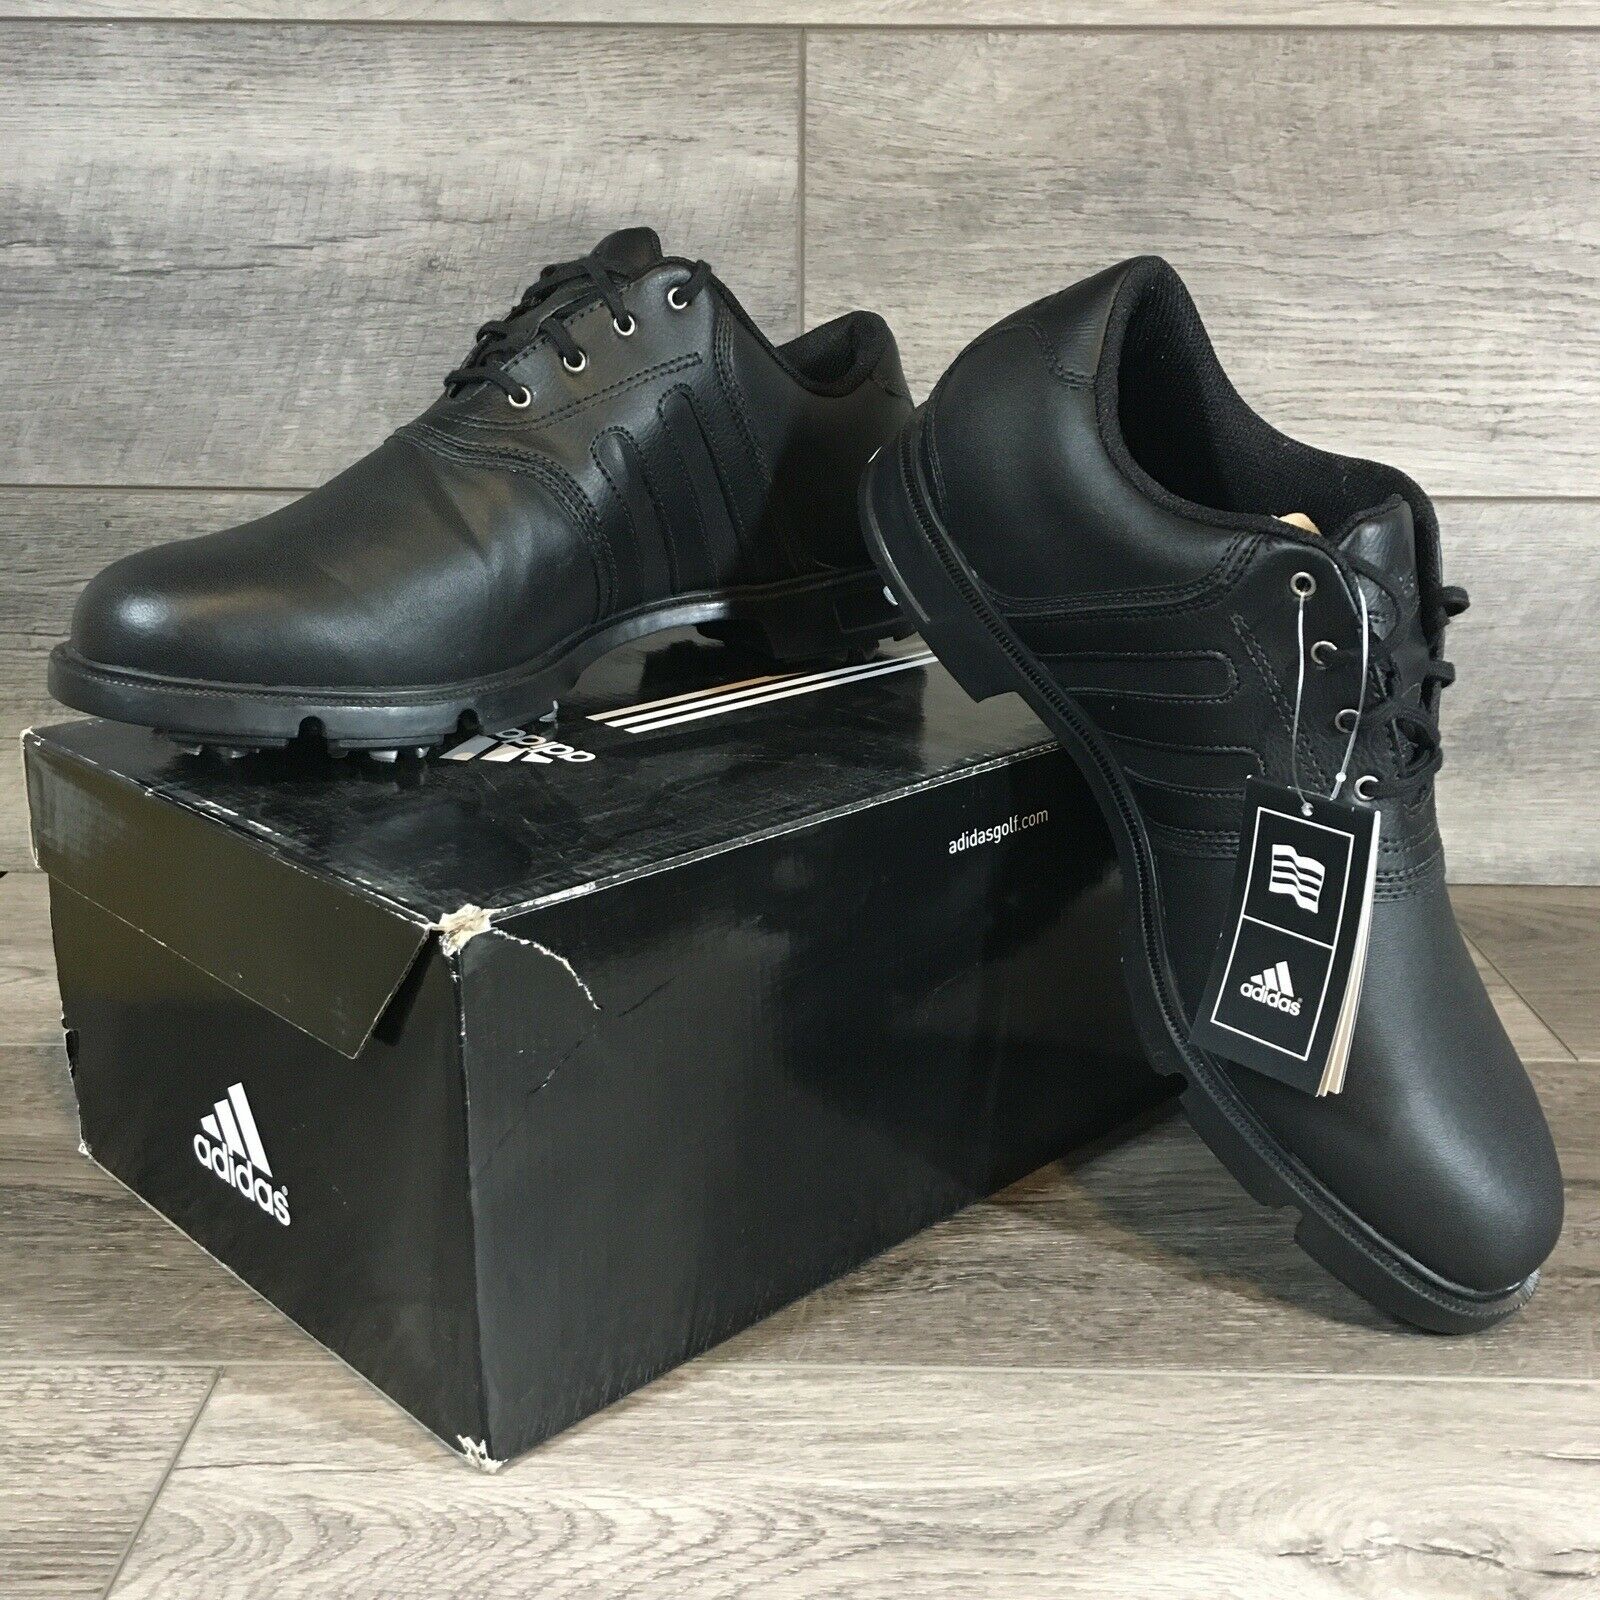 Adidas Adiwear SL Z Traxion Golf Cleats Shoes Mens Size 8 Black Black New In Box